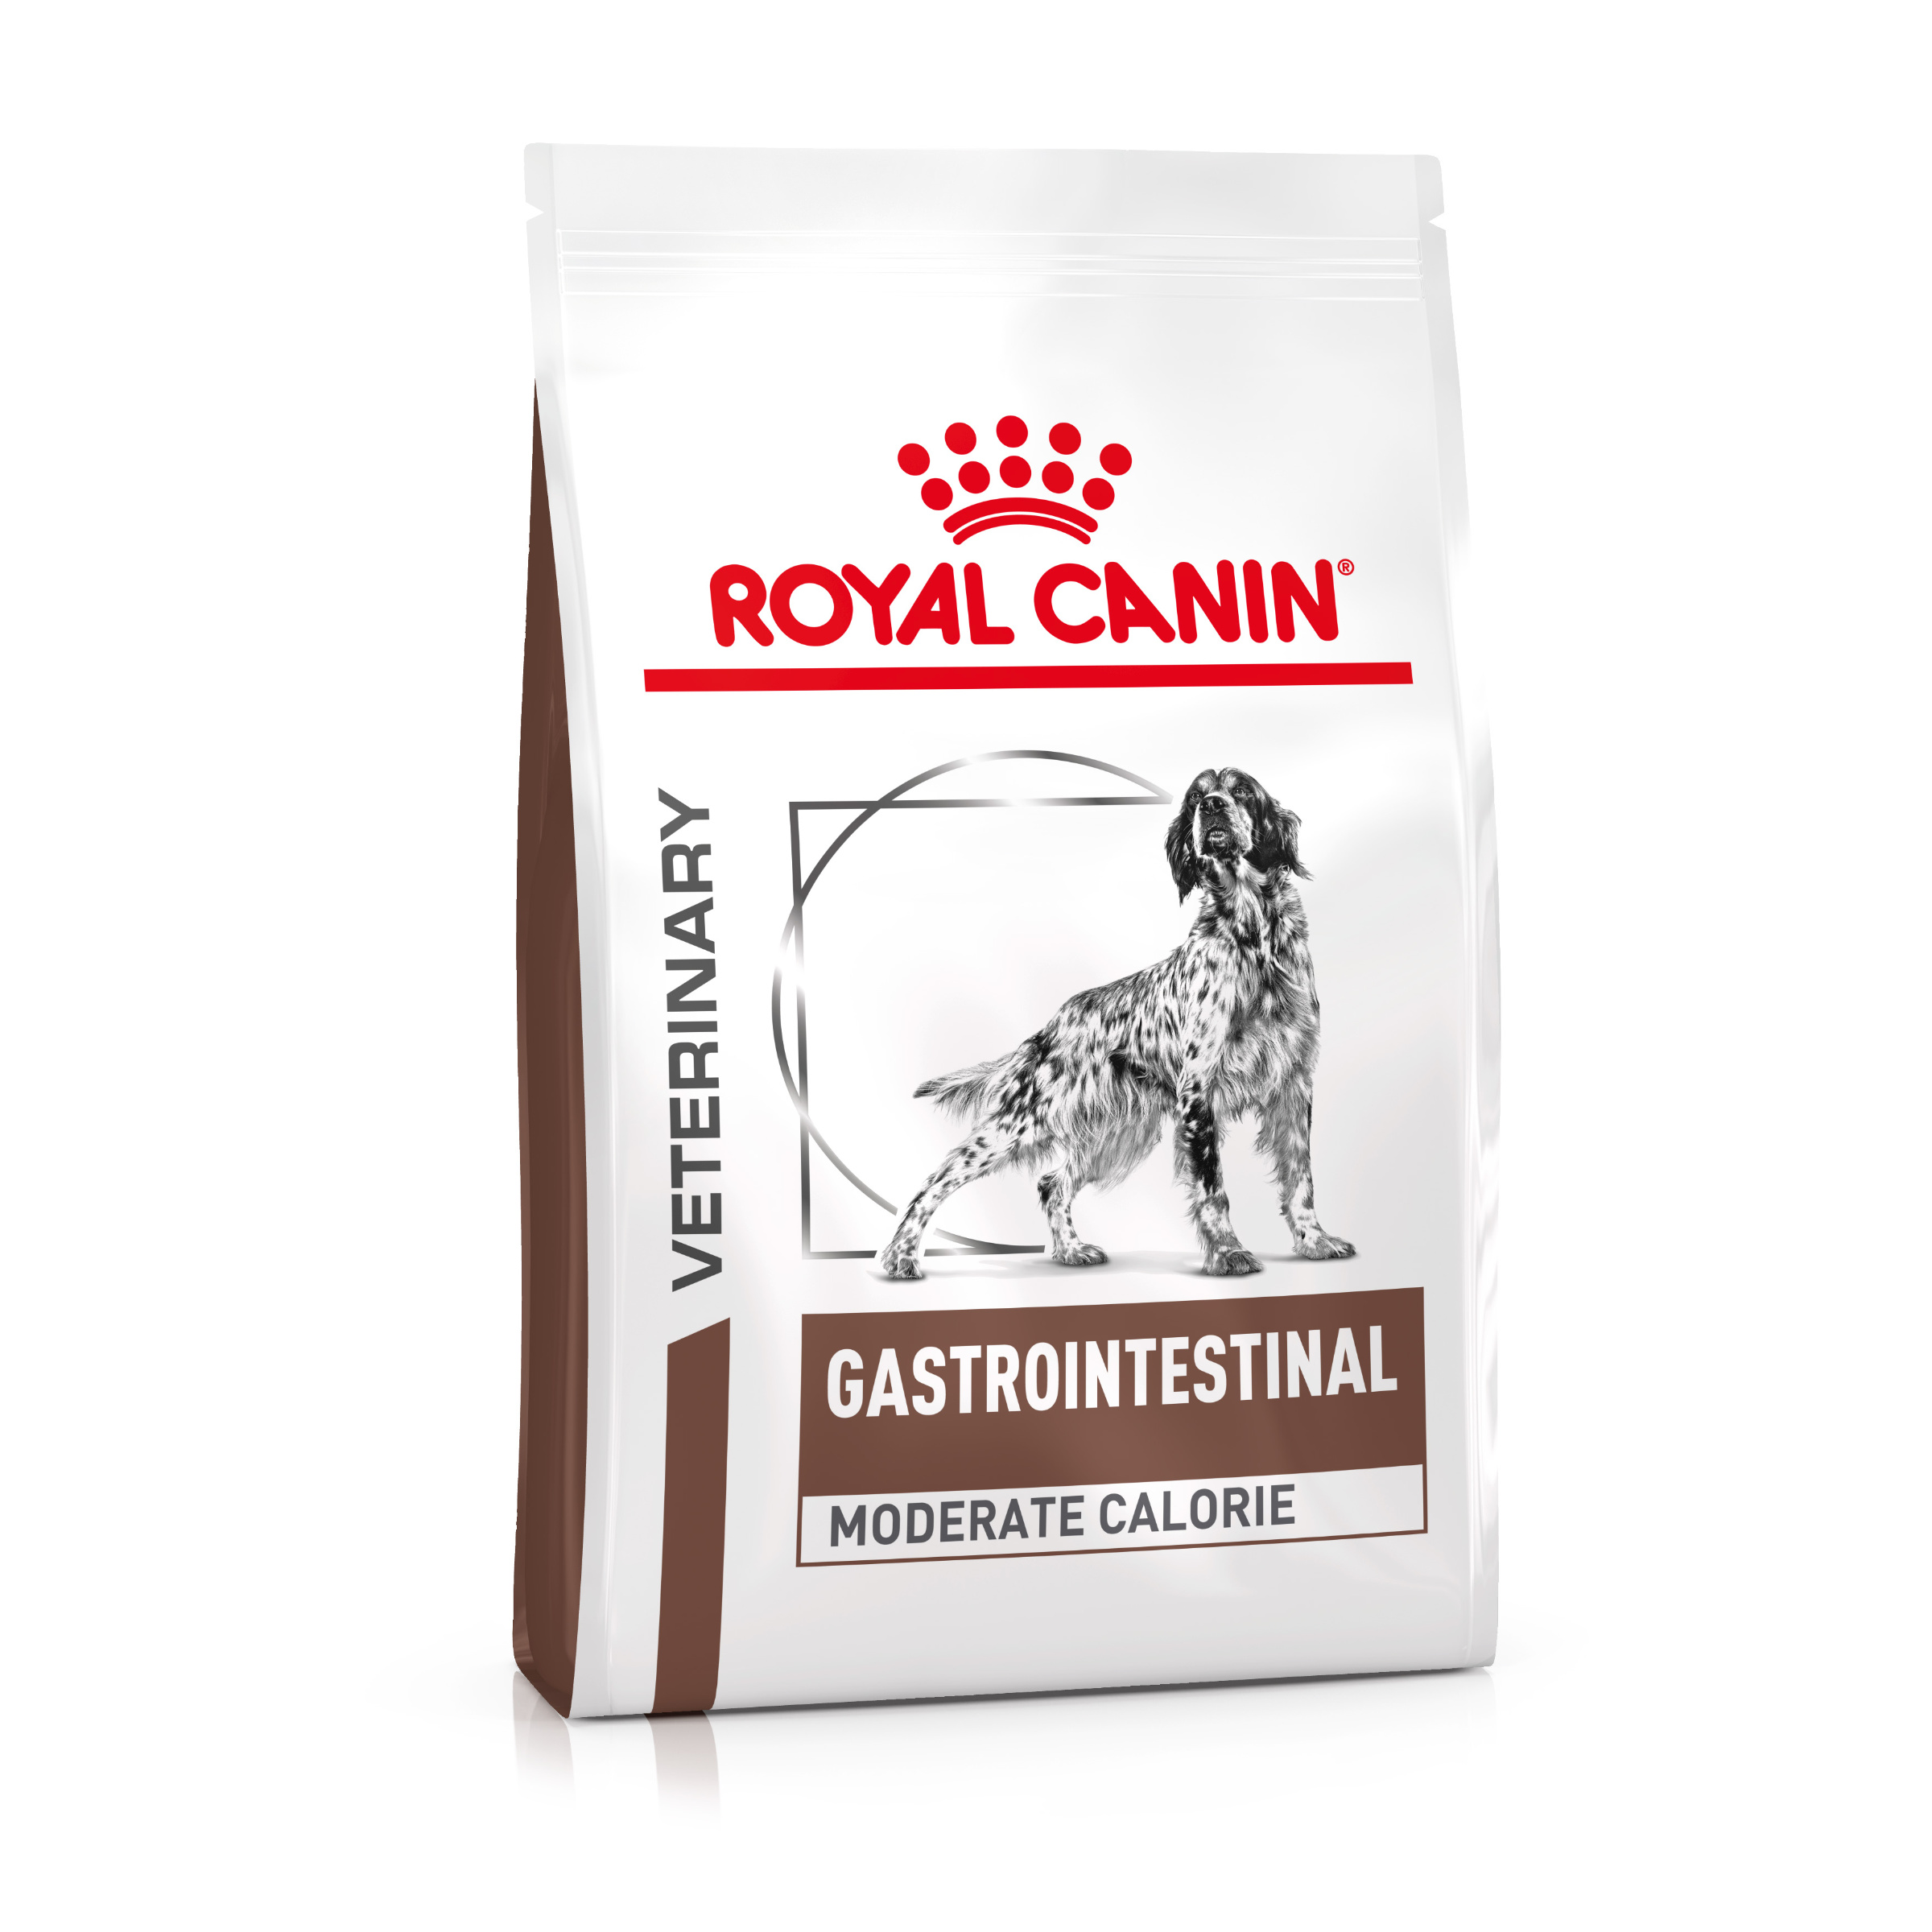 ROYAL CANIN Veterinary GASTROINTESTINAL MODERATE CALORIE Trockenfutter für Hunde 15 kg (Hund)